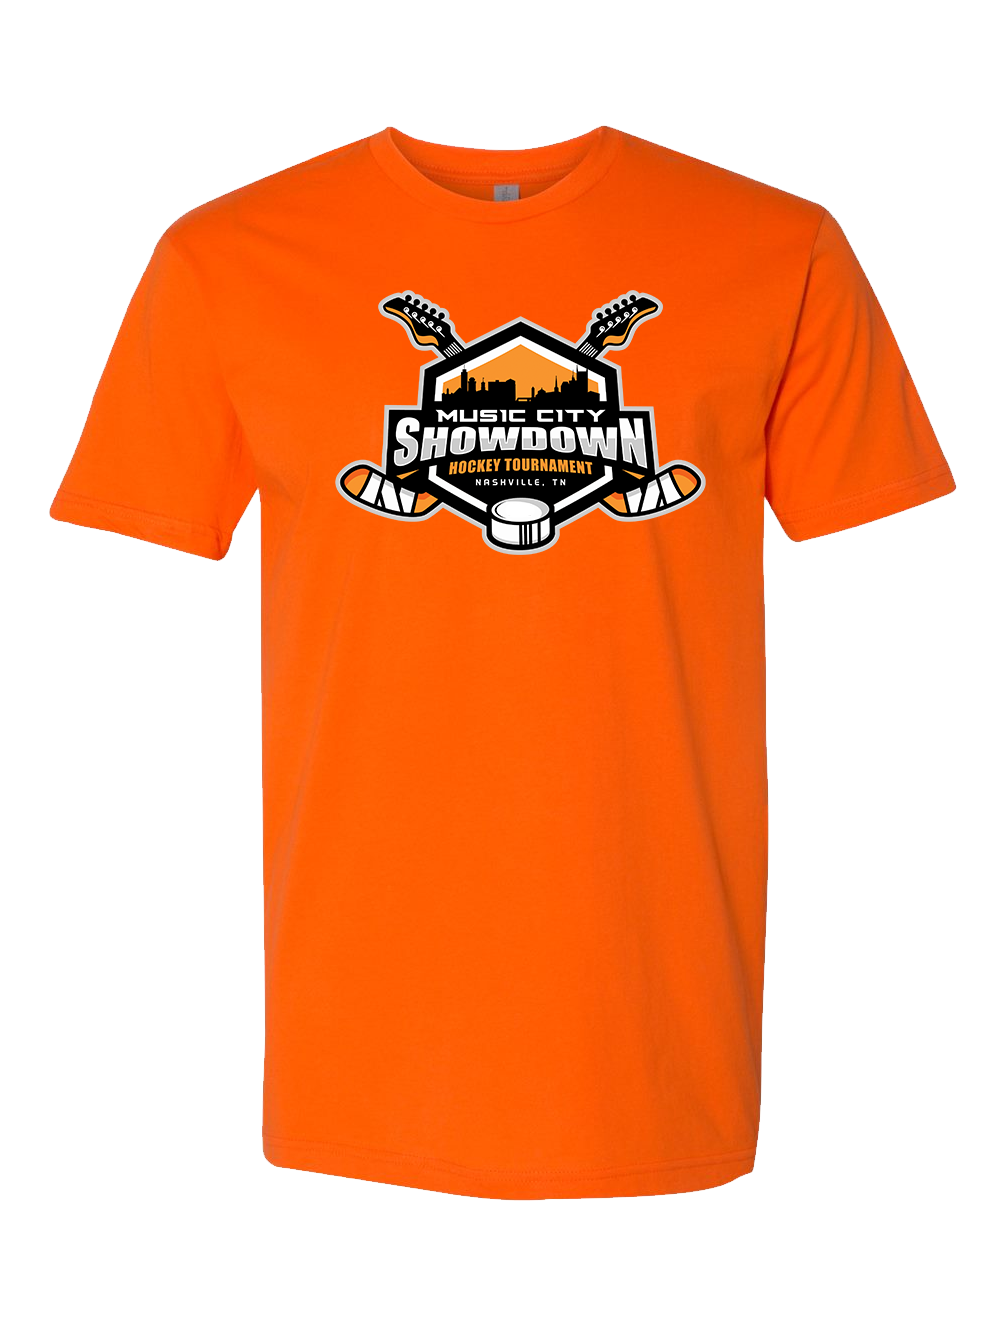 Music City Showdown T-Shirt (Orange)